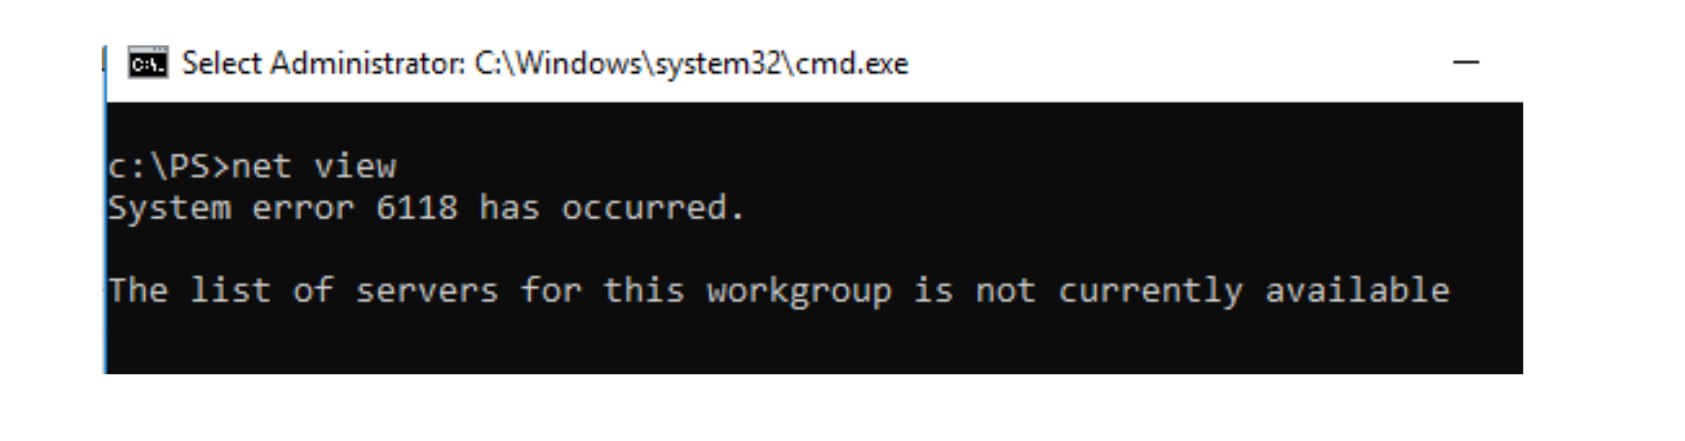 system error 6118 has occurred